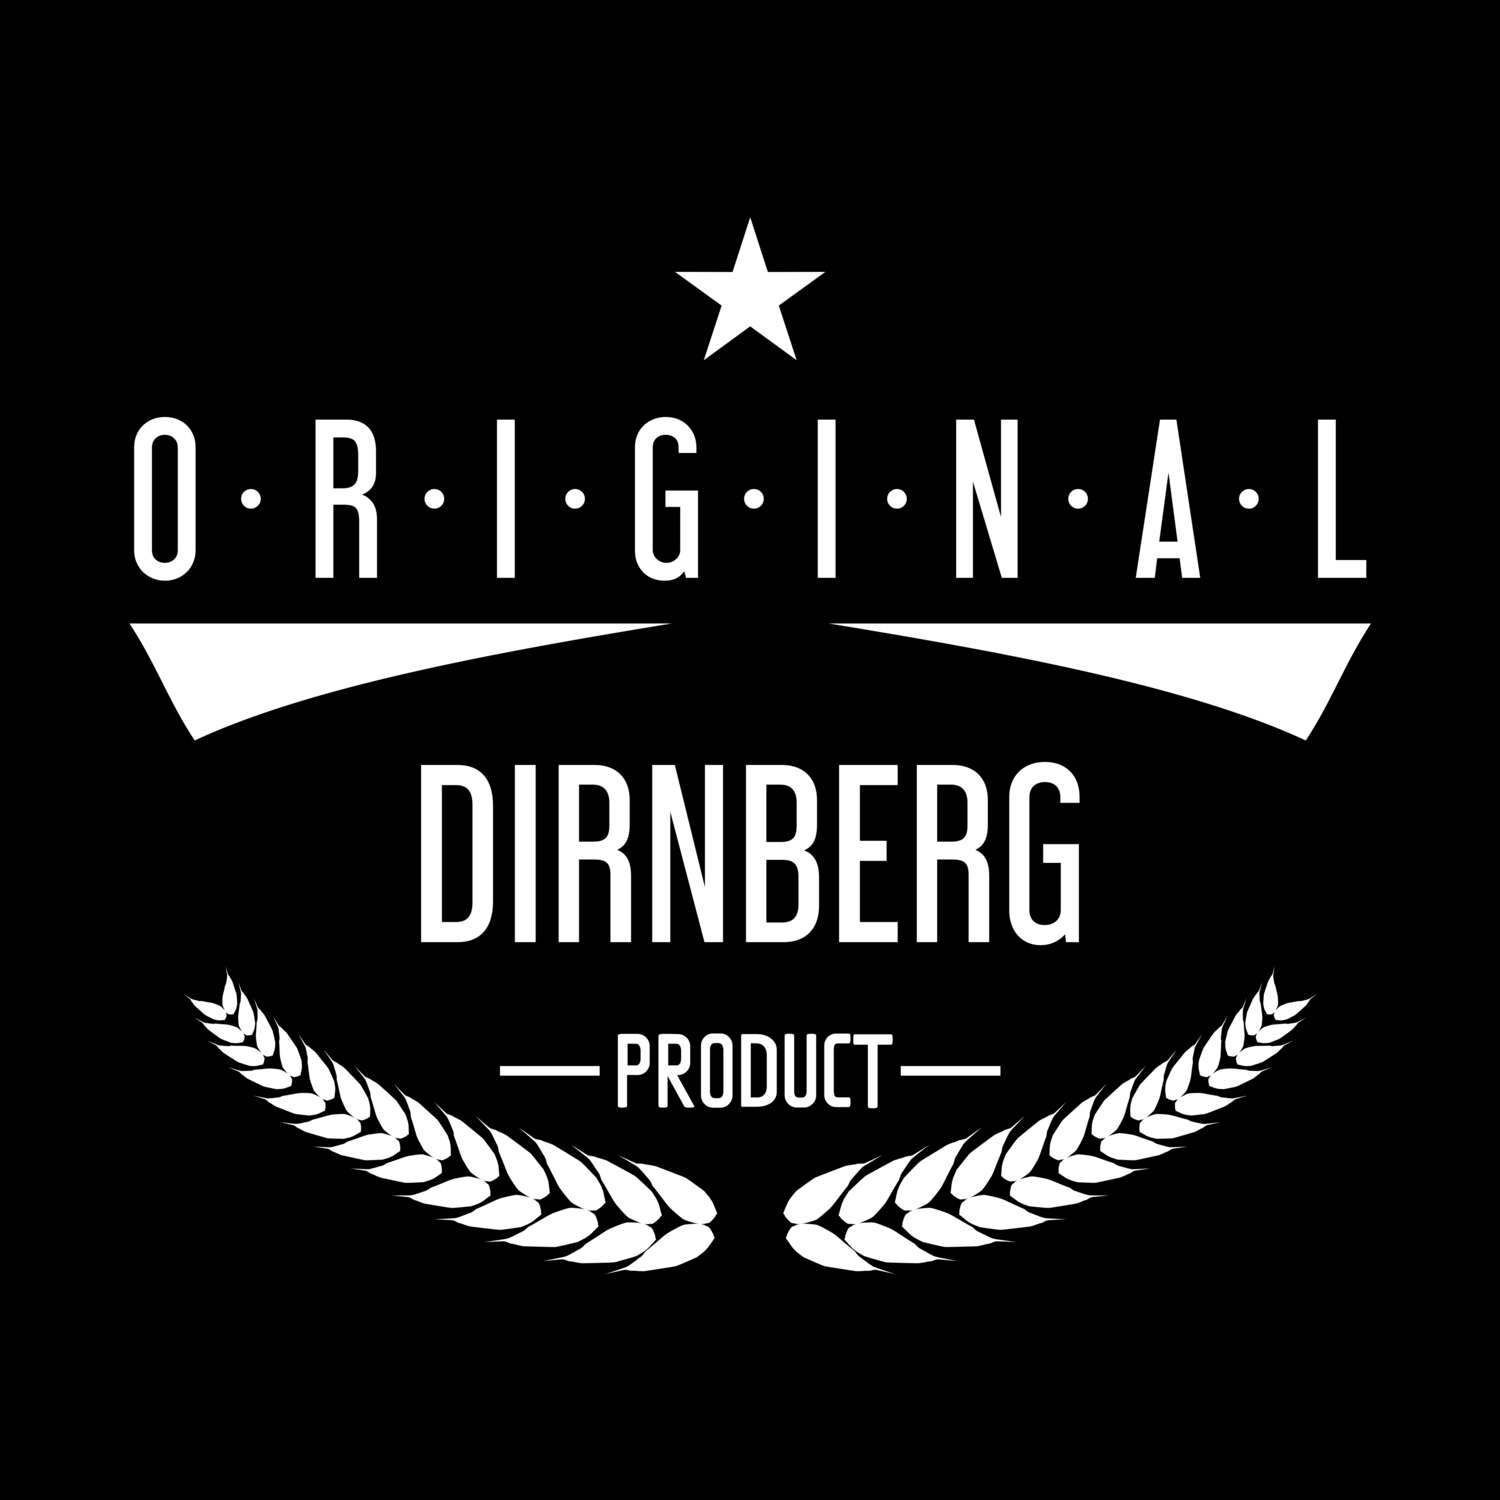 Dirnberg T-Shirt »Original Product«